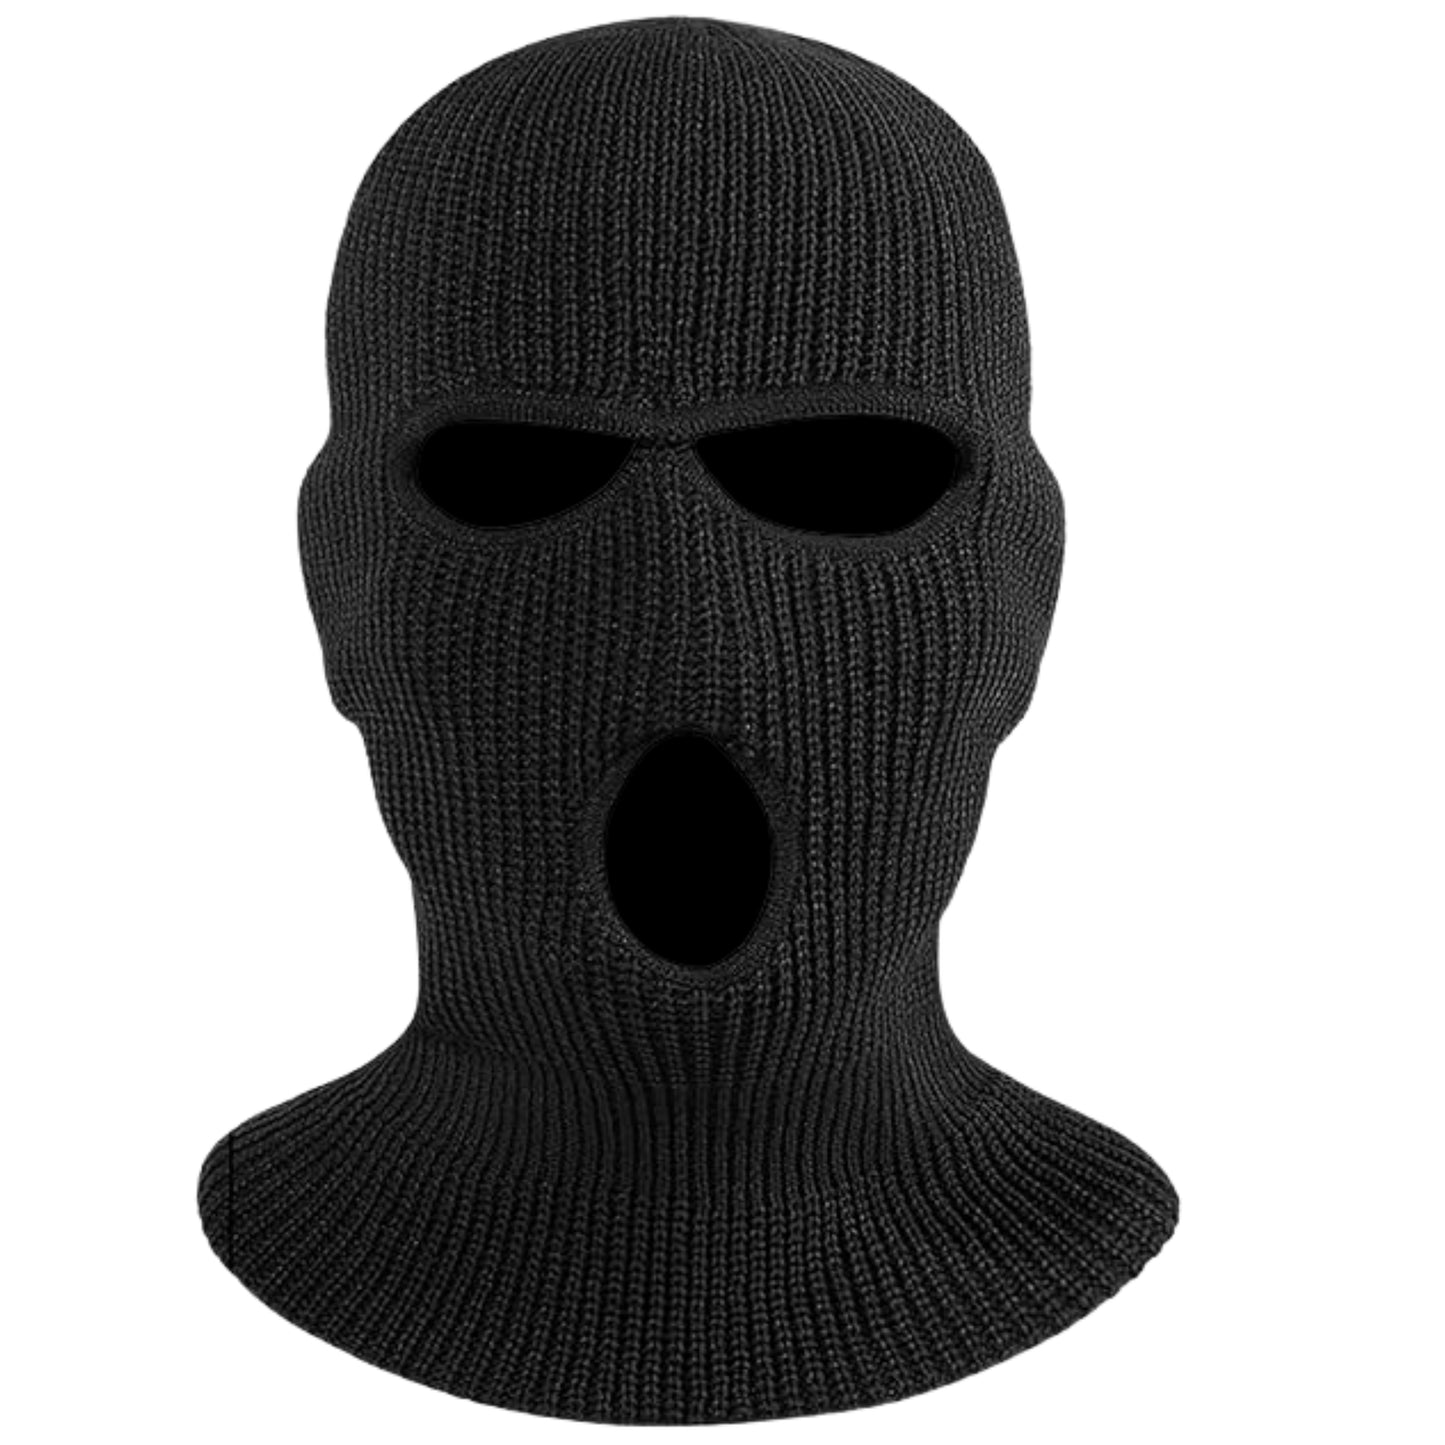 Skizees black knitted ski masks for cold weather